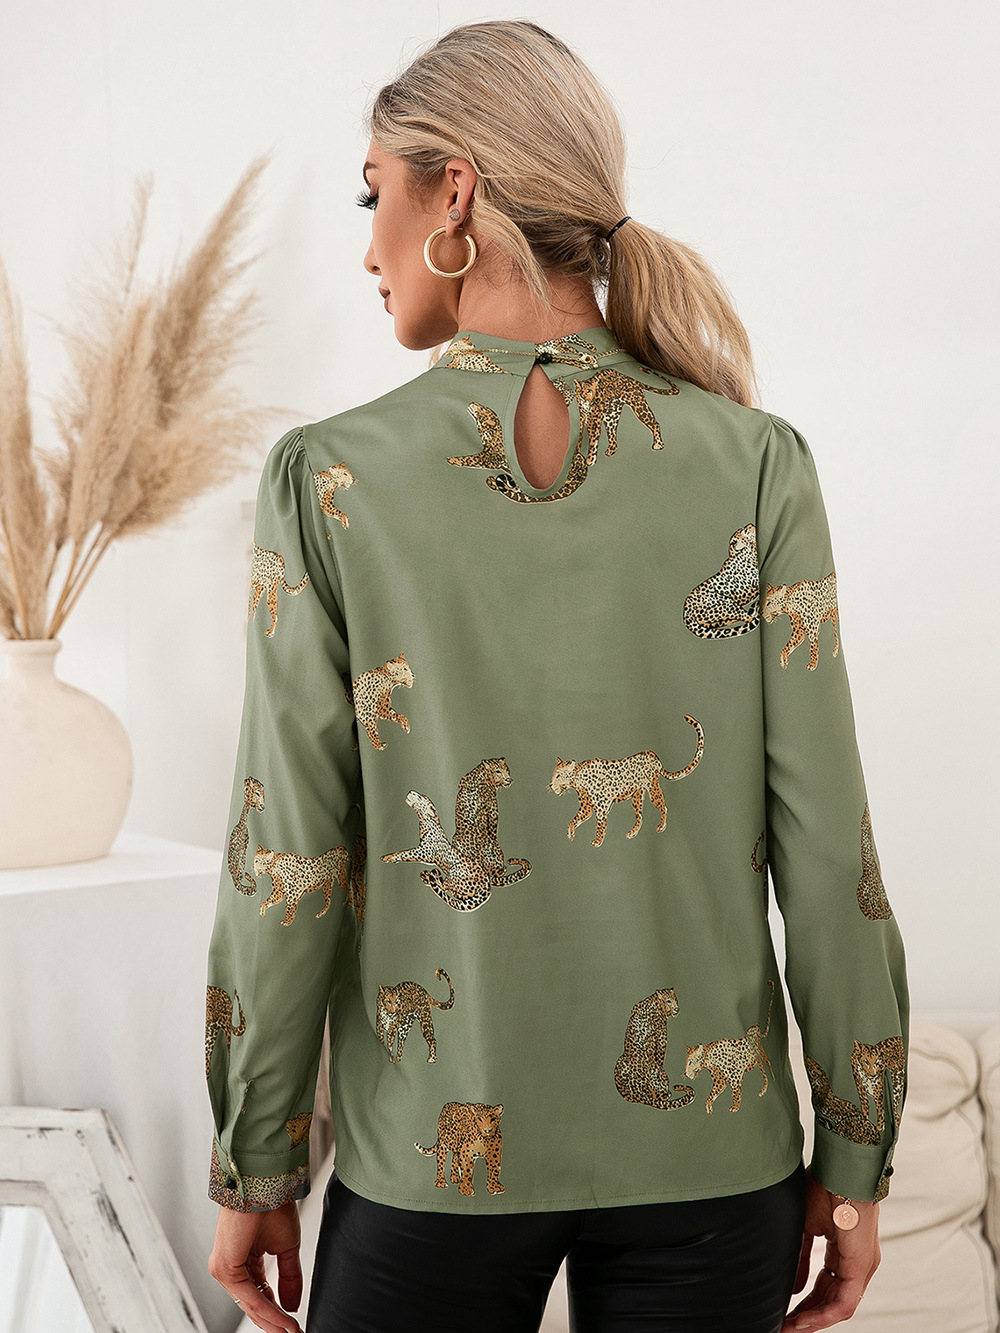 Leopard Printed Shirt Long Sleeve Pullover Shirt - Blouses & Shirts - Uniqistic.com